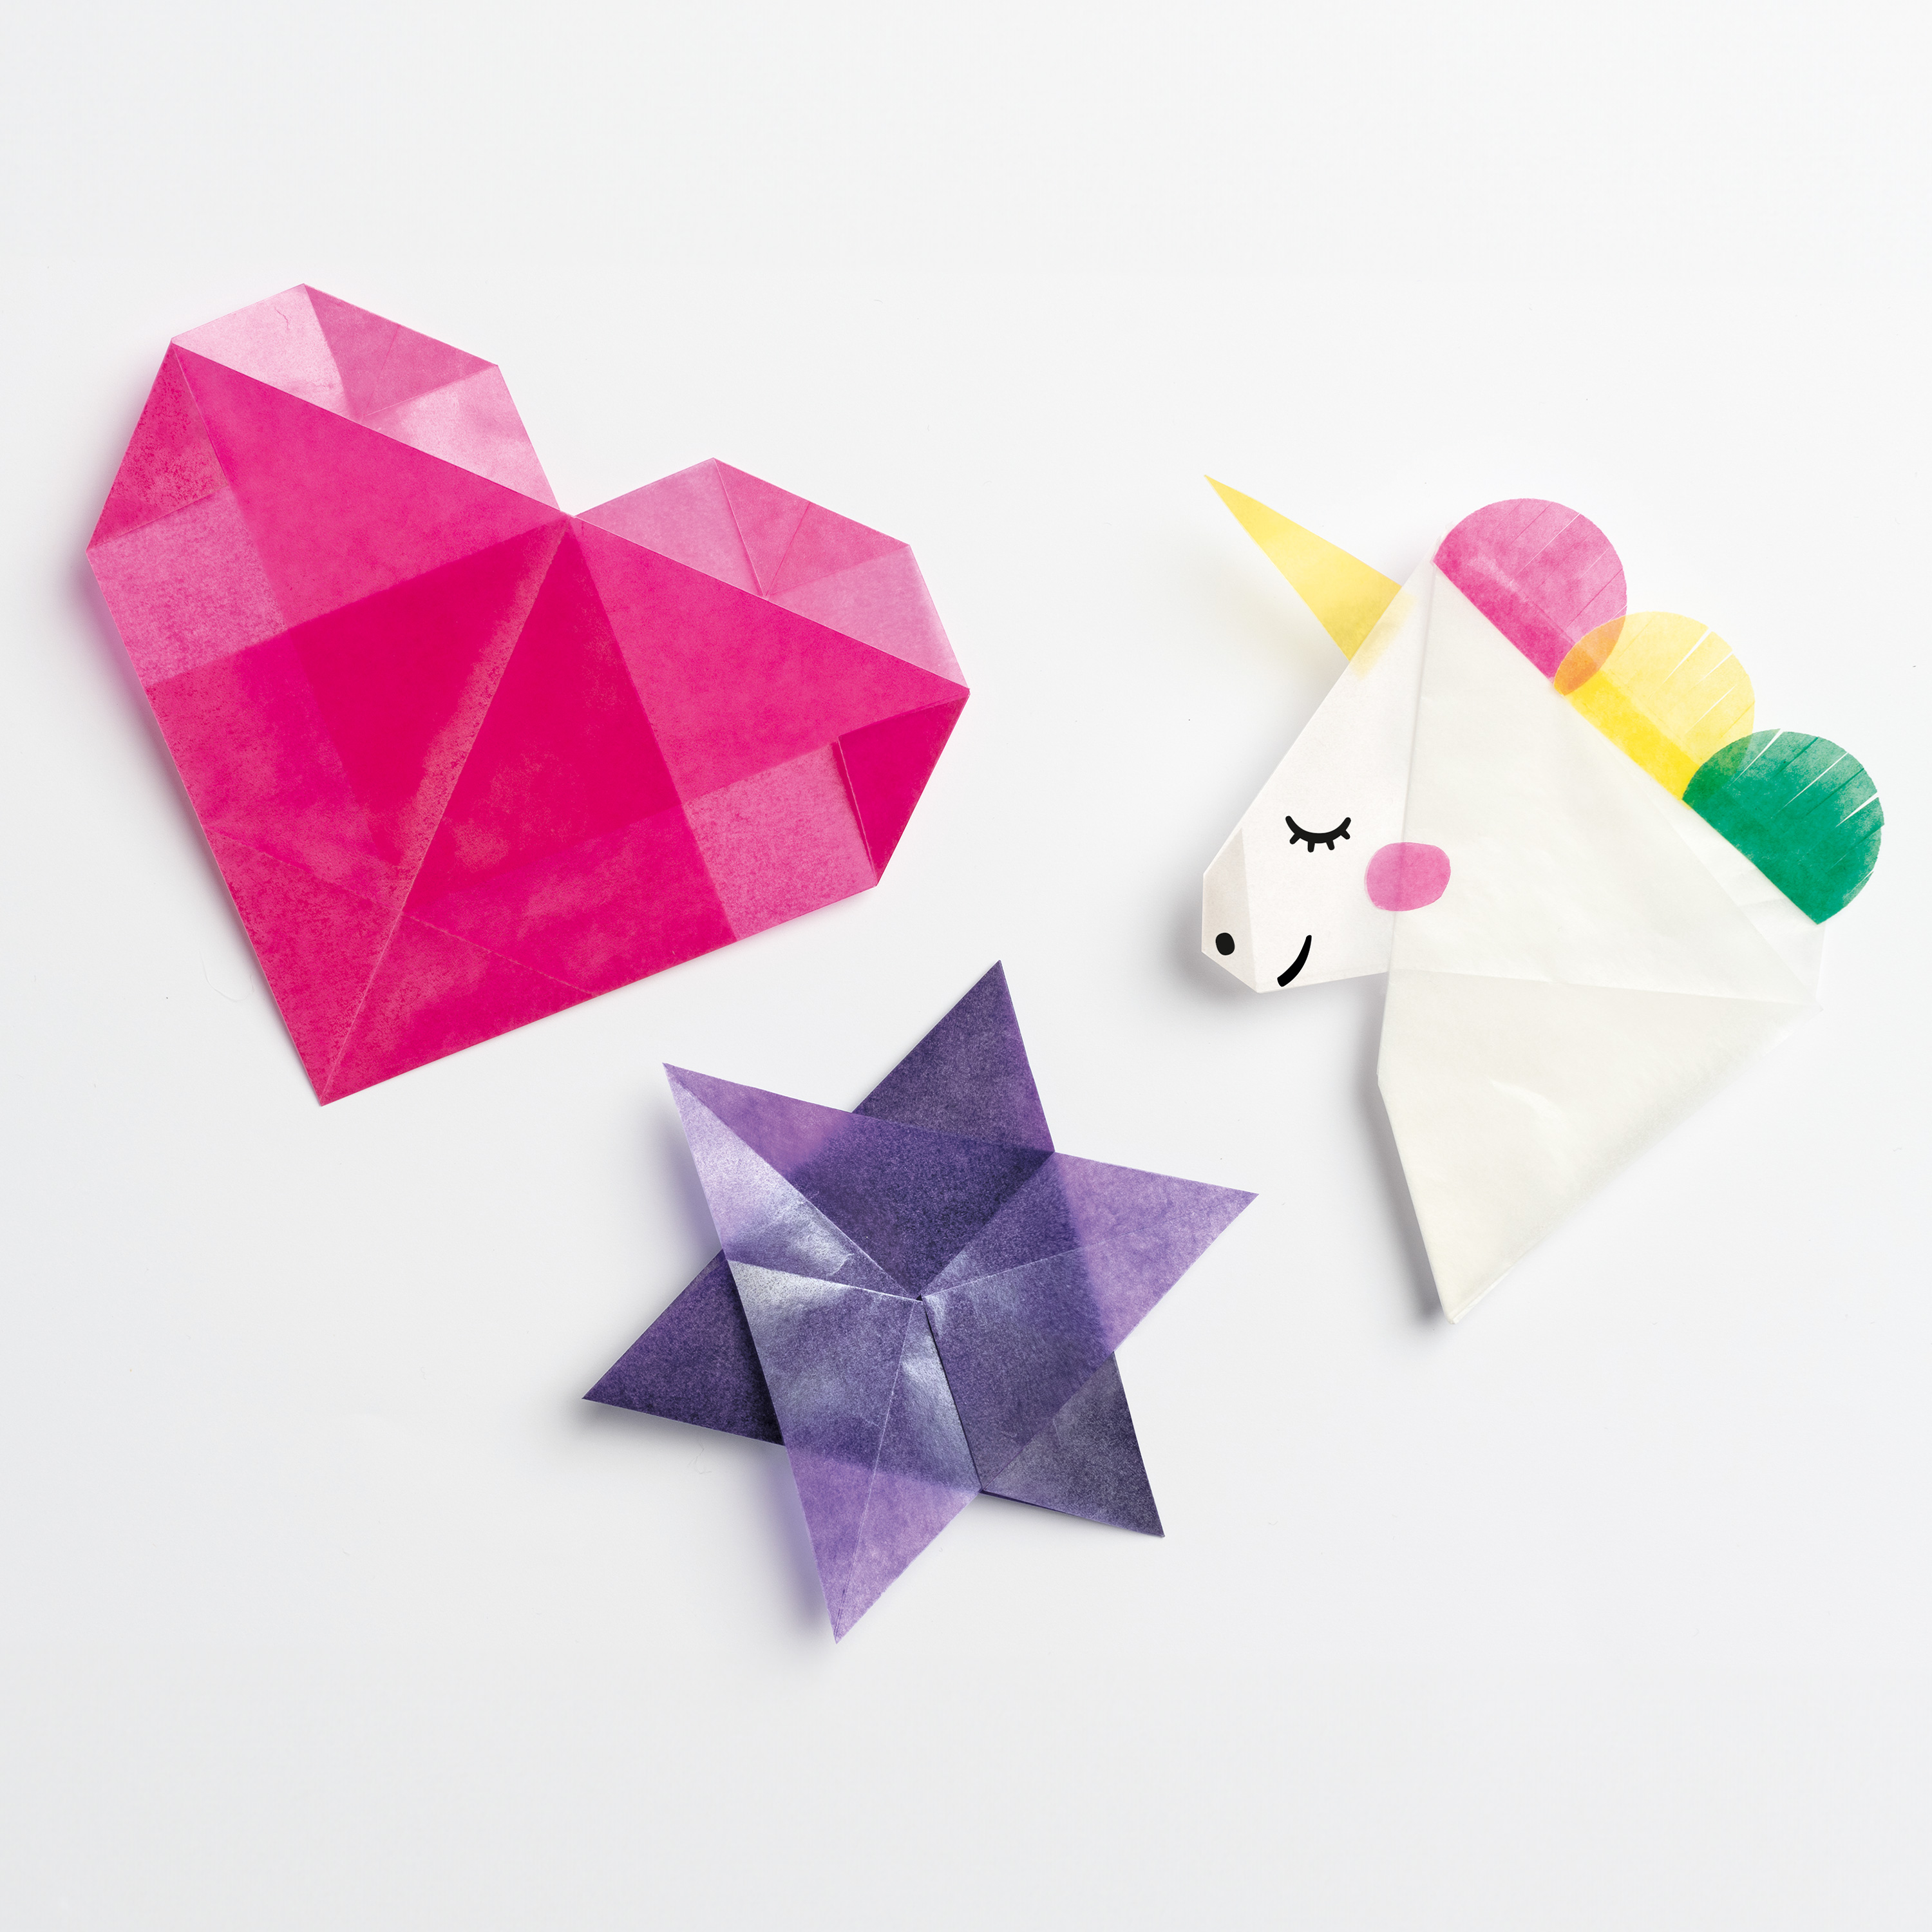 Origami Faltblätter Transparentpapier, 10 x 10 cm